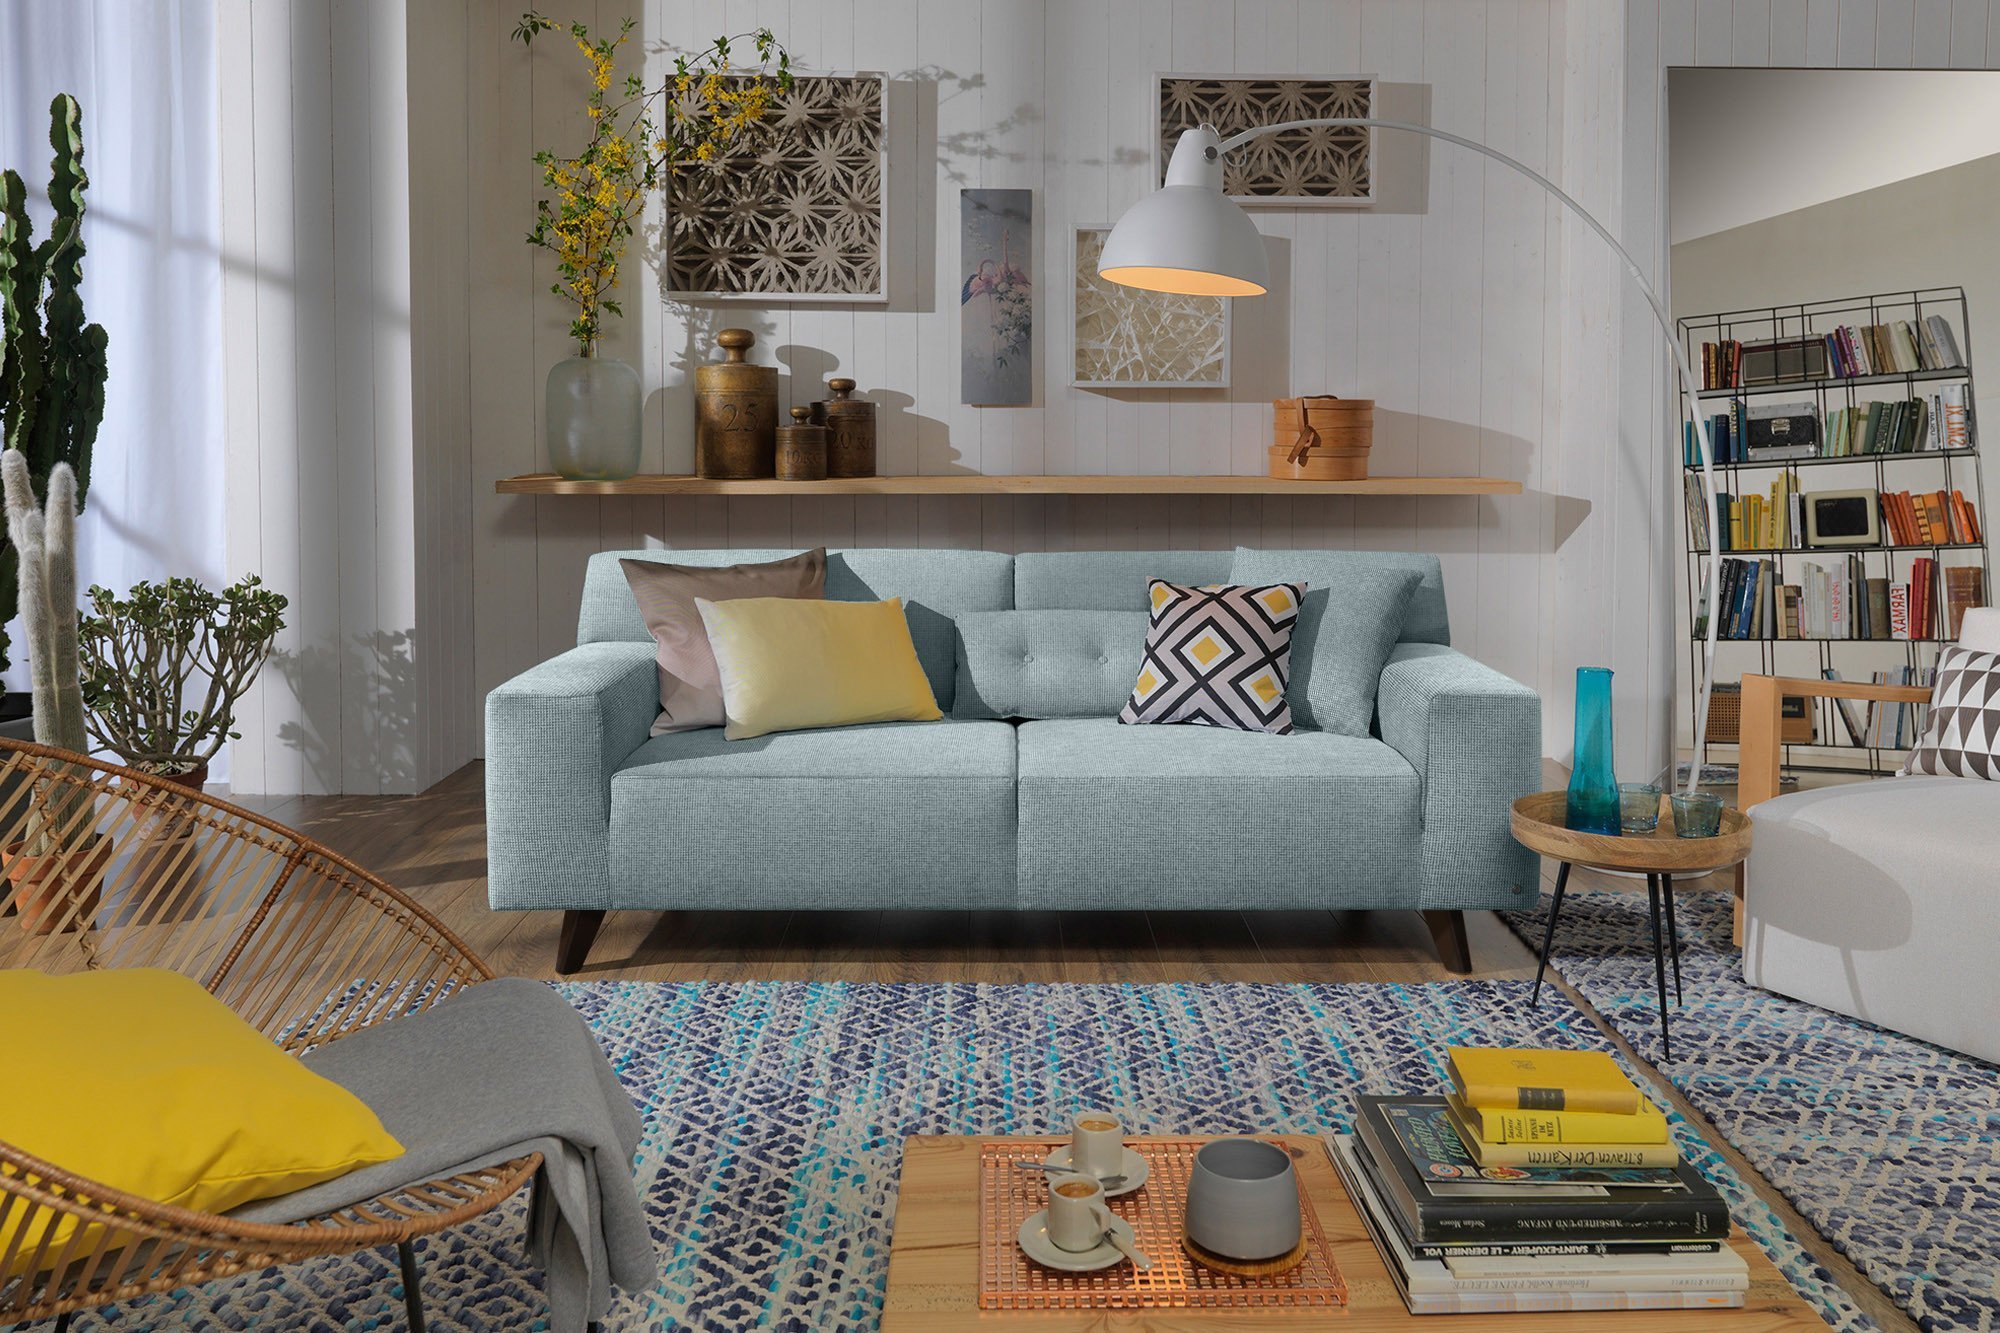 Tom Tailor Nordic Pure 6041 Couch in Hellblau | Möbel Letz - Ihr Online-Shop